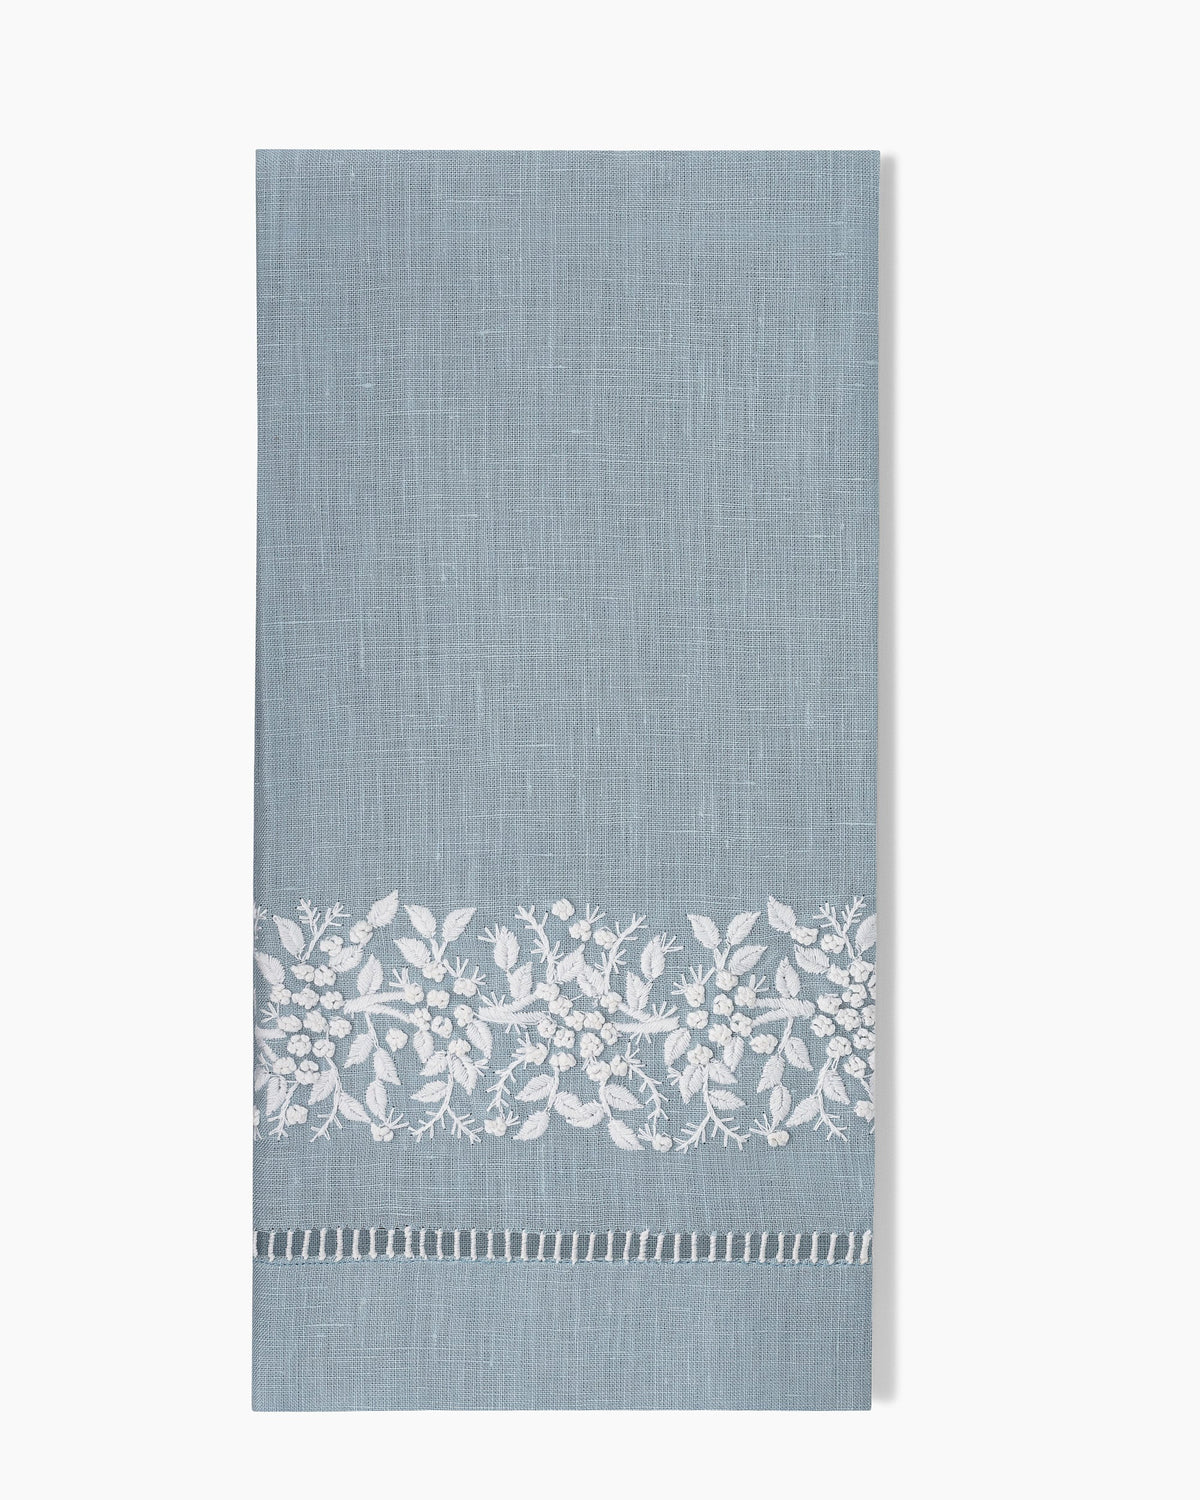 Jardin Classic Linen Hand Towel in Six Colors